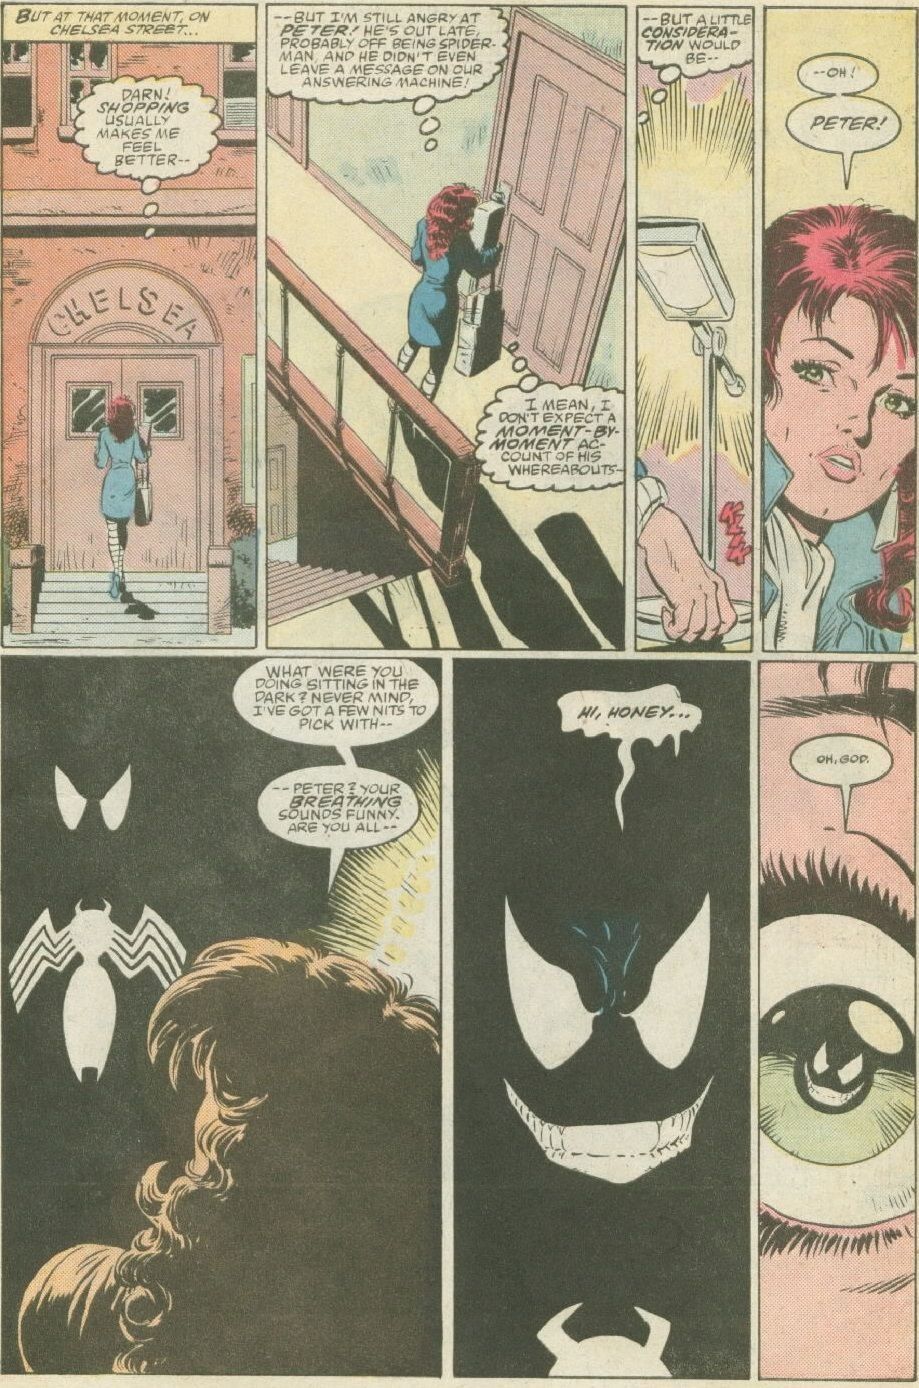 Mary Jane meets Venom